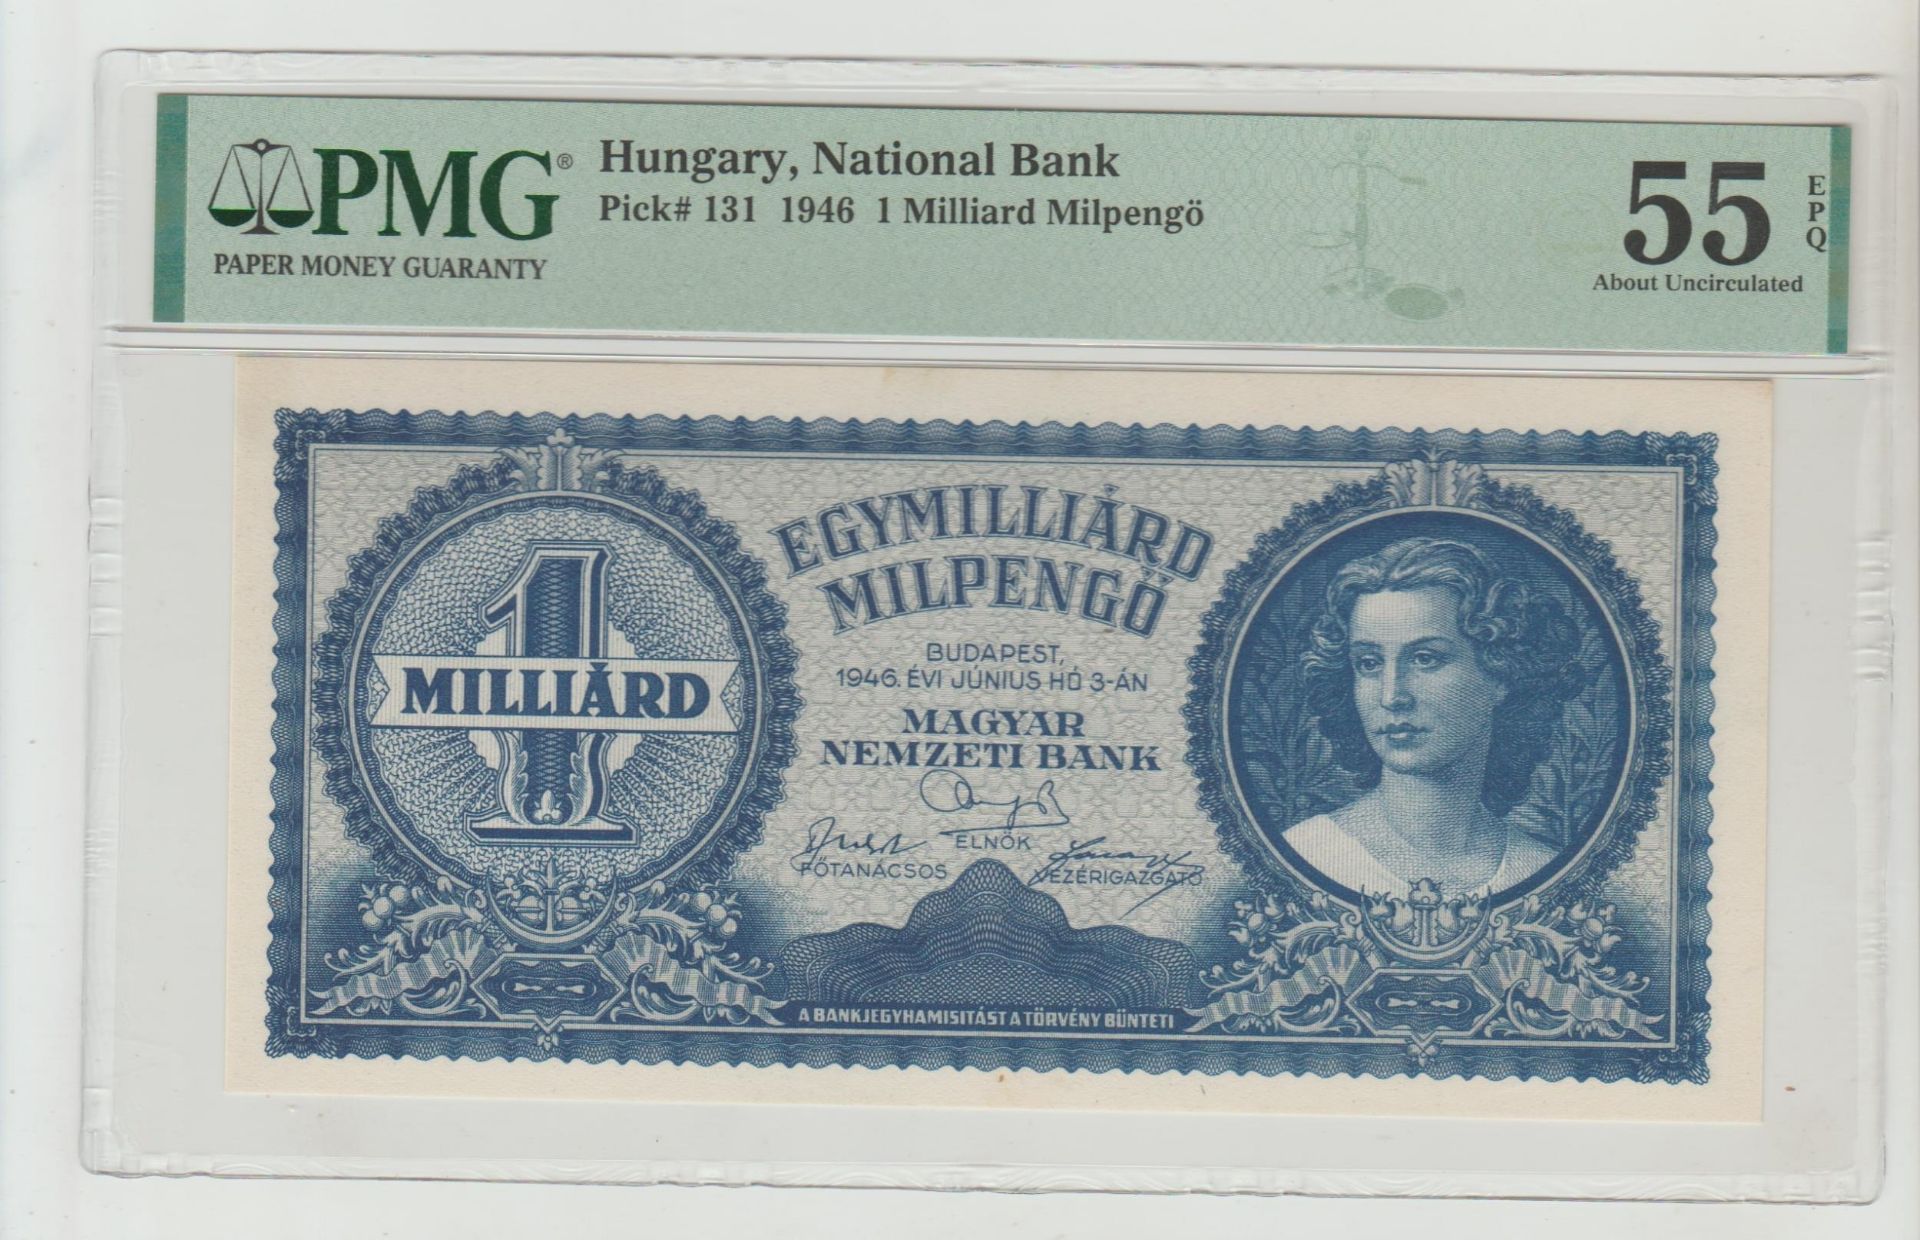 Hungary, 1 Milliard Milpengo, 1946 year